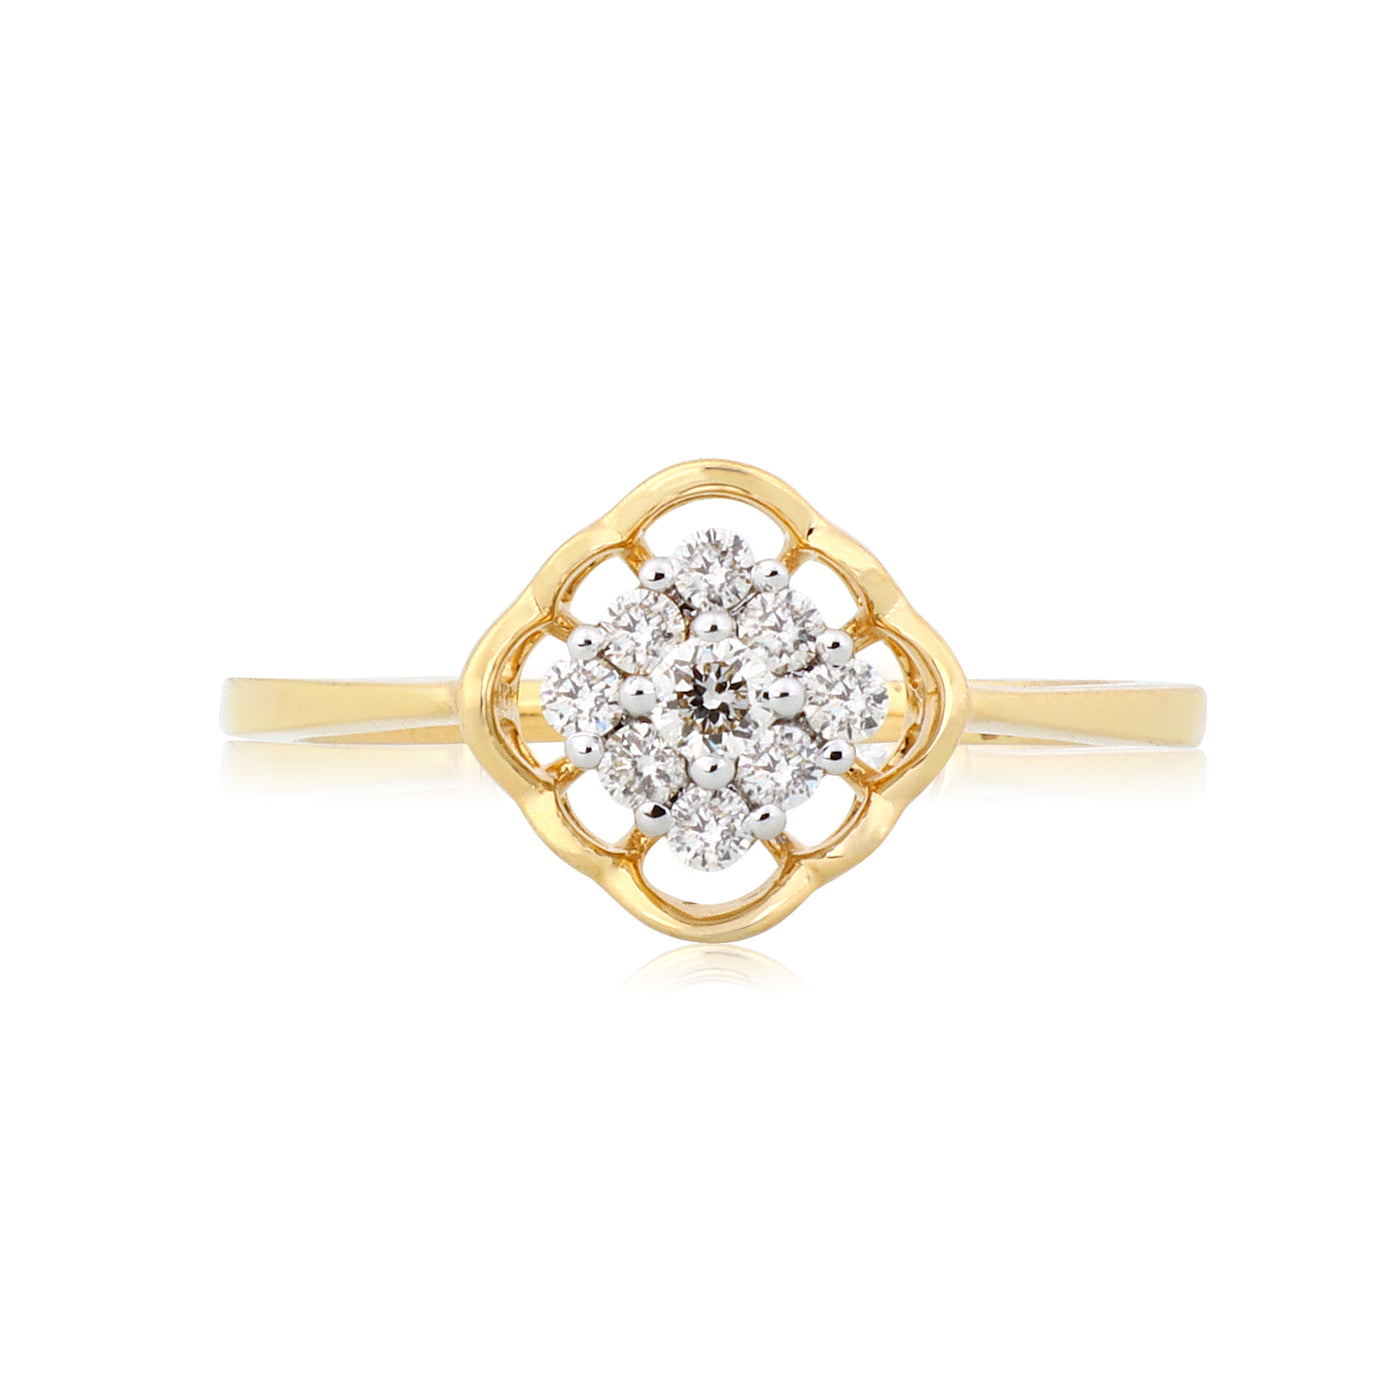 The Sharp Bloom Diamond Ring